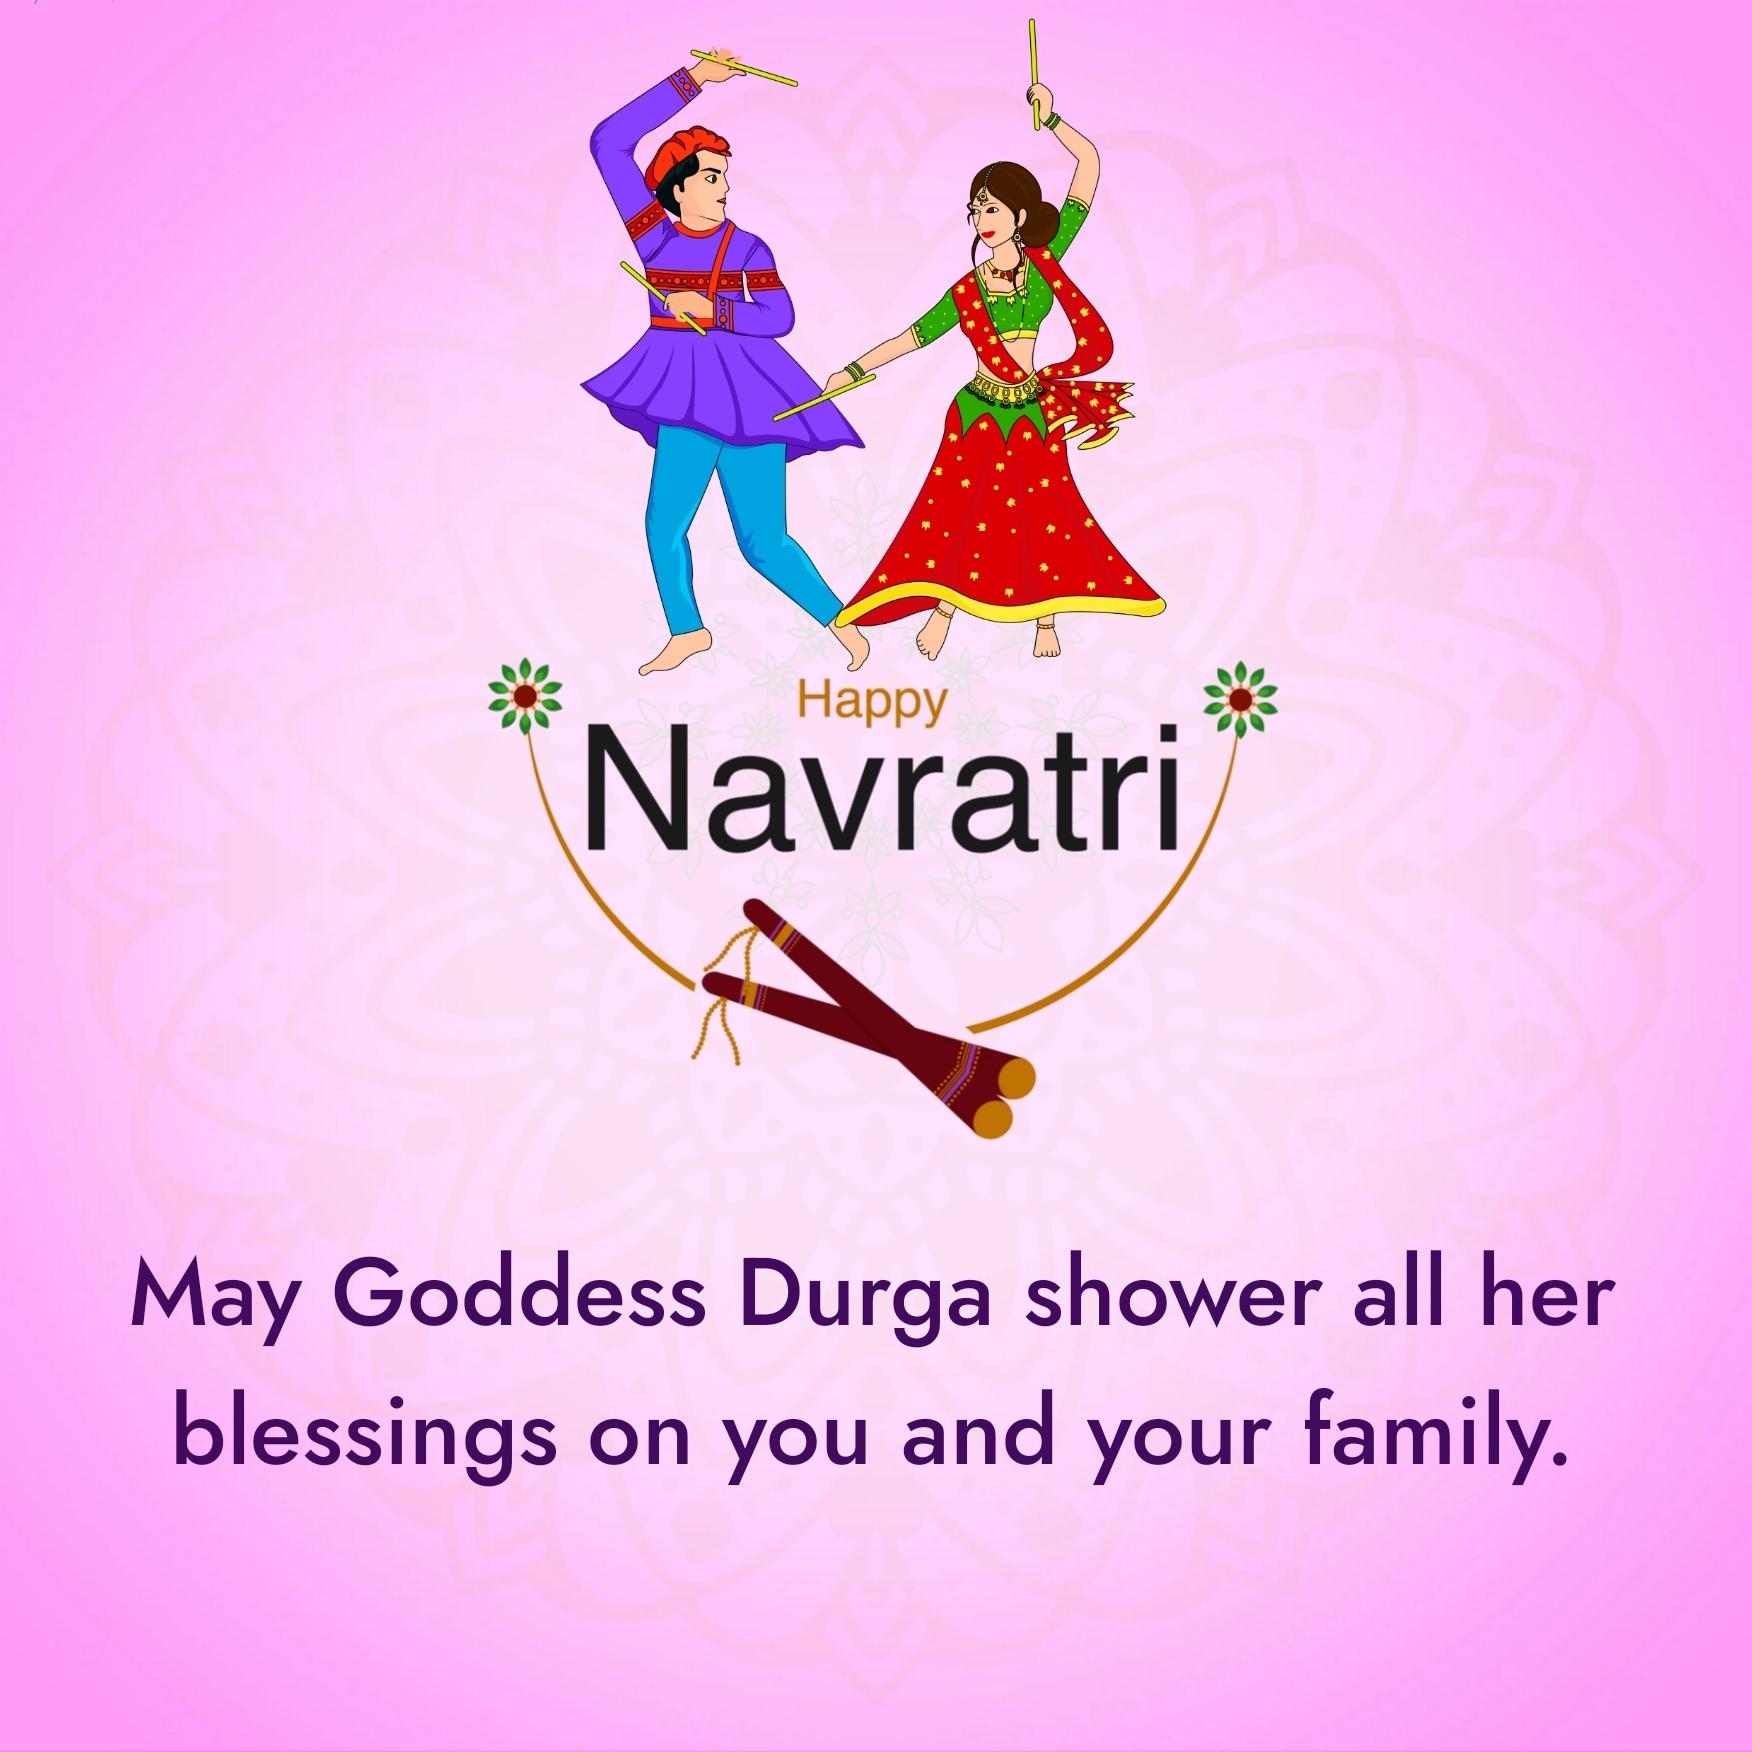 May Goddess Durga shower all her blessings on you